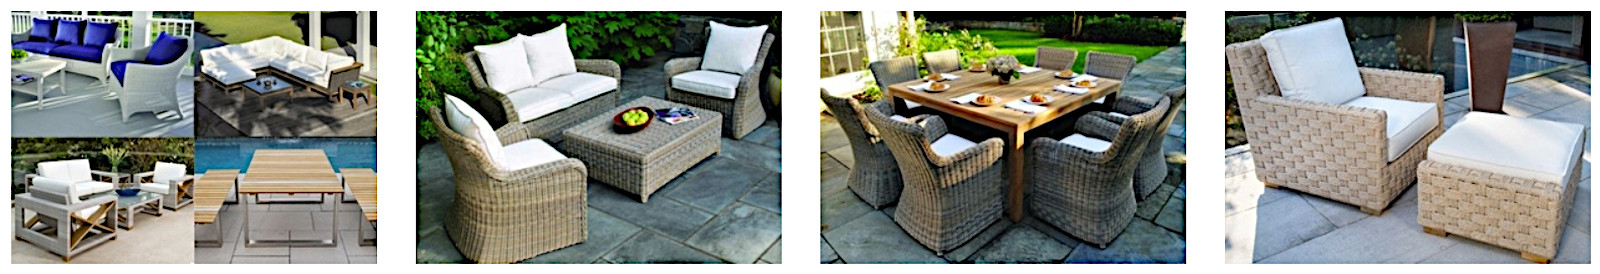 On Offer Kingsley Bate teak garden furniture